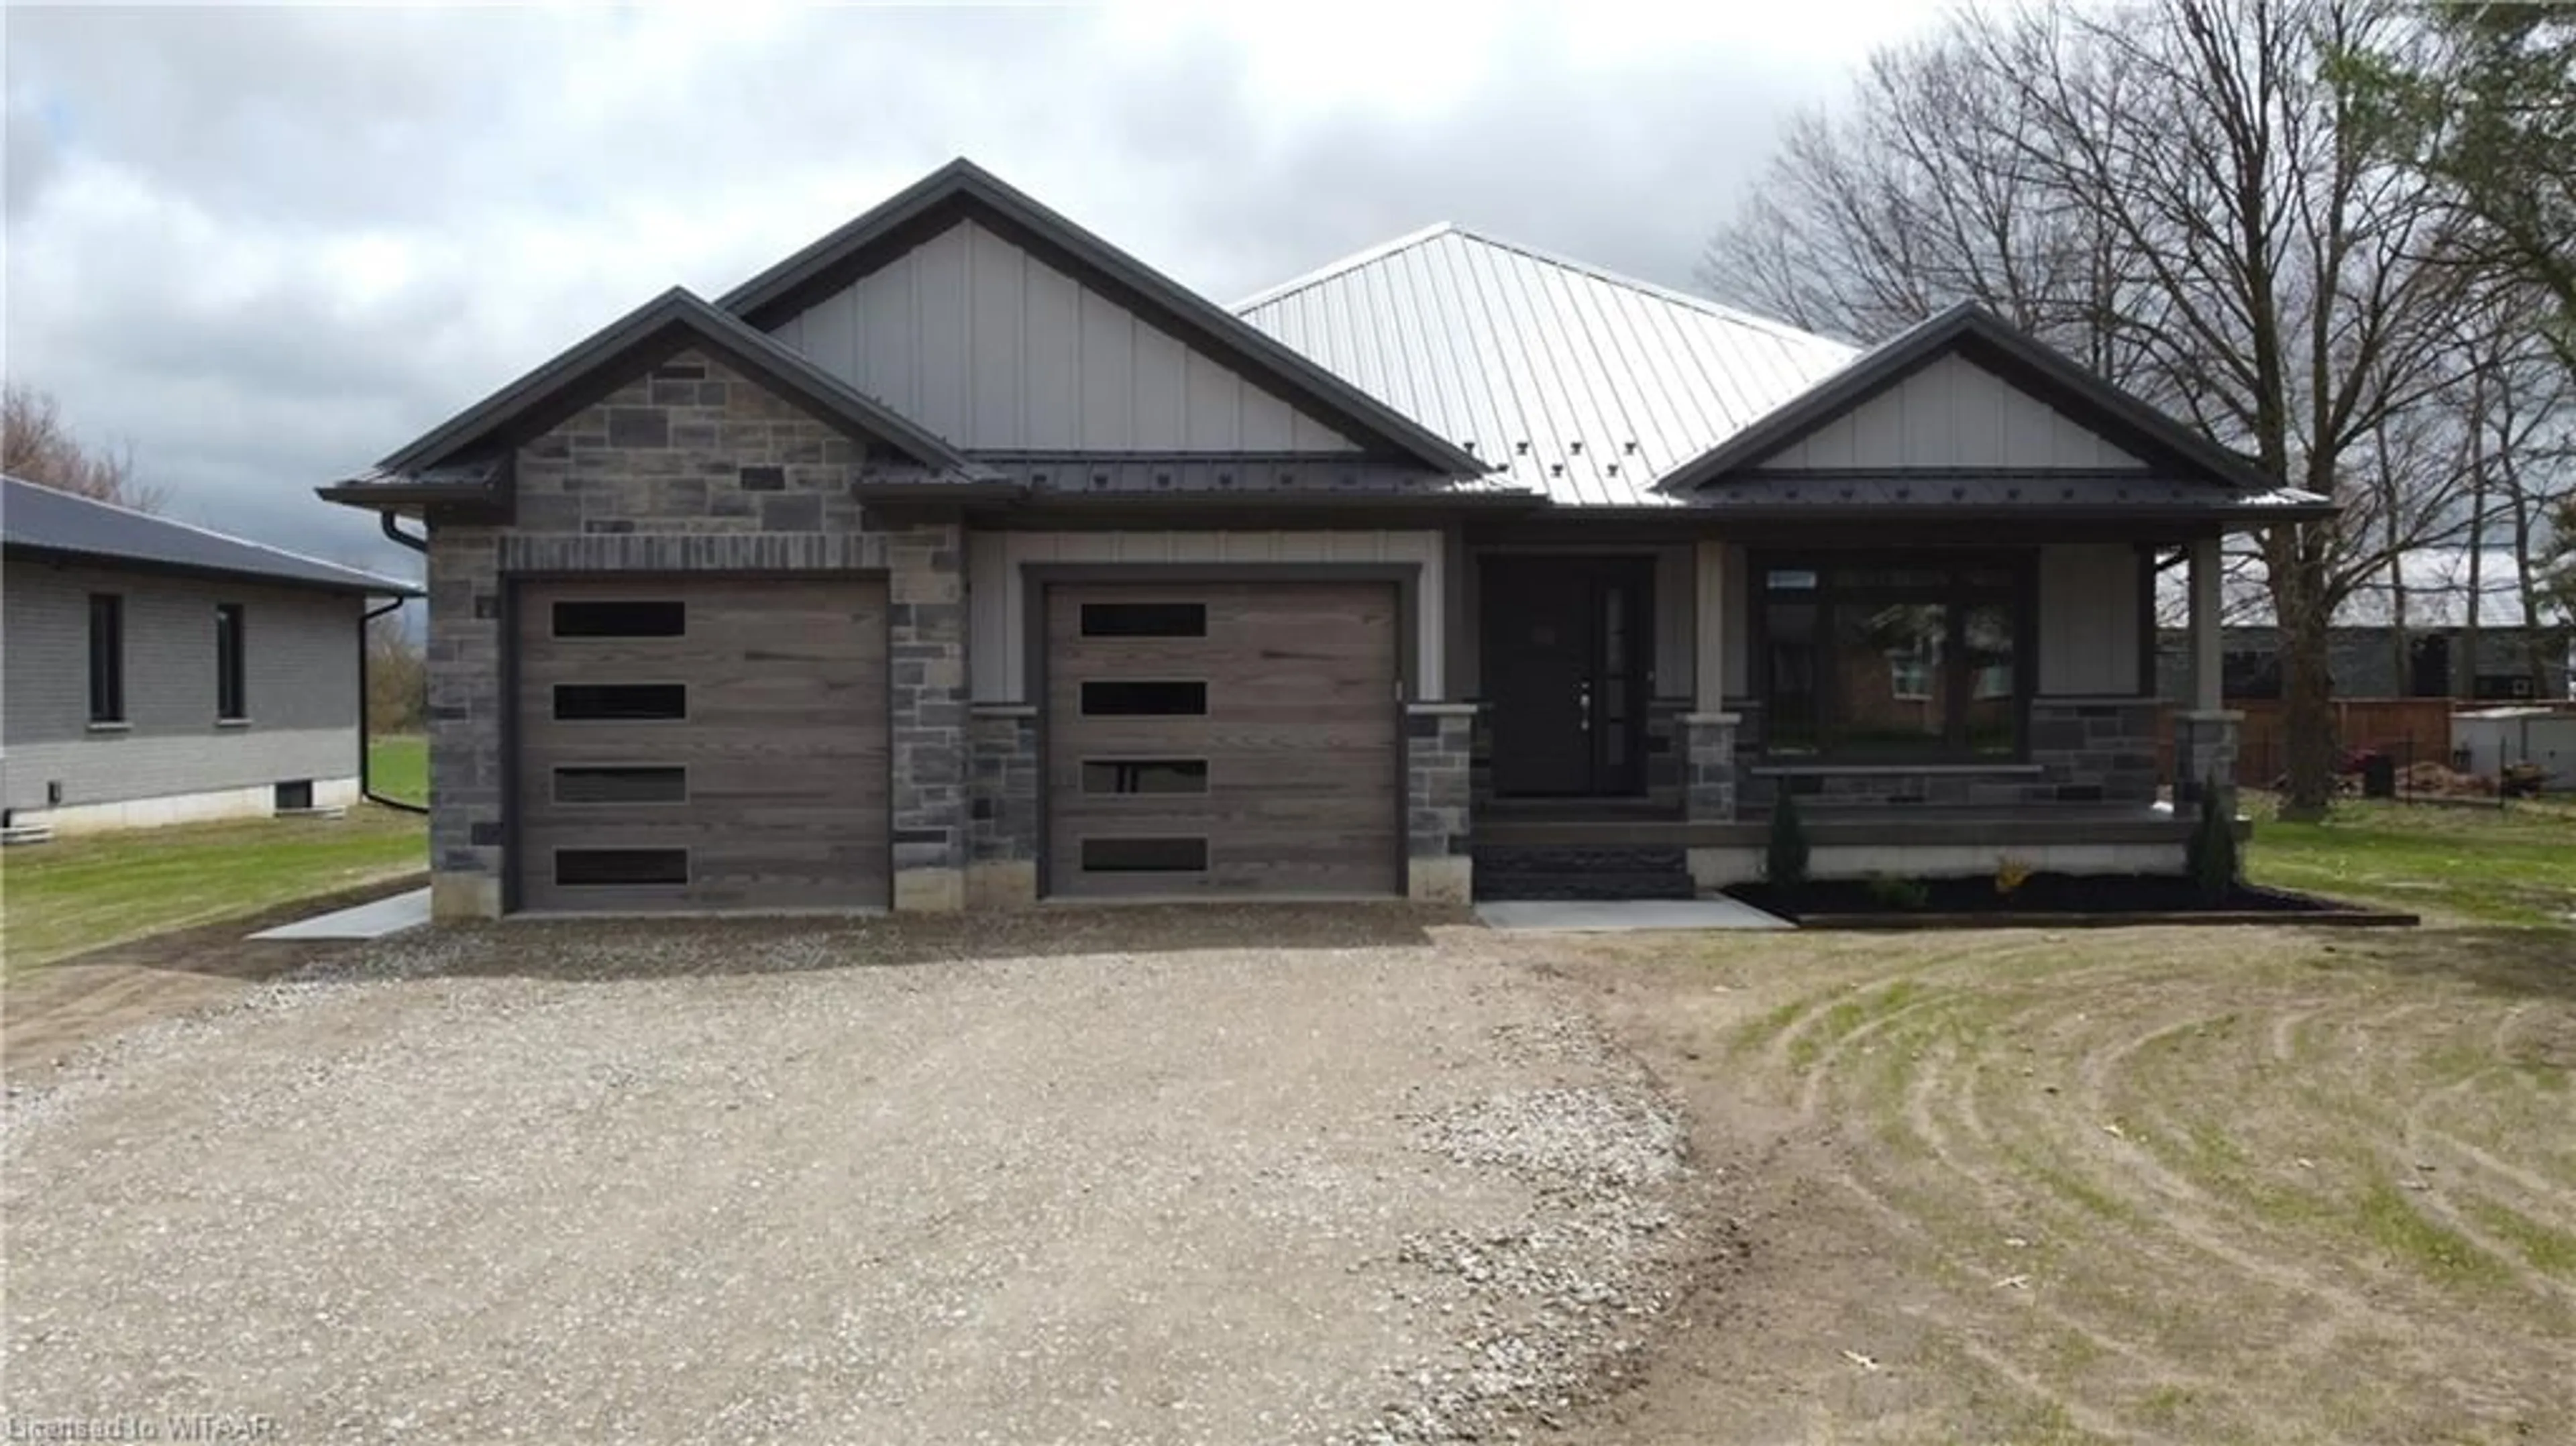 Frontside or backside of a home for 194 Lasalette Rd, LaSalette Ontario N0E 1H0